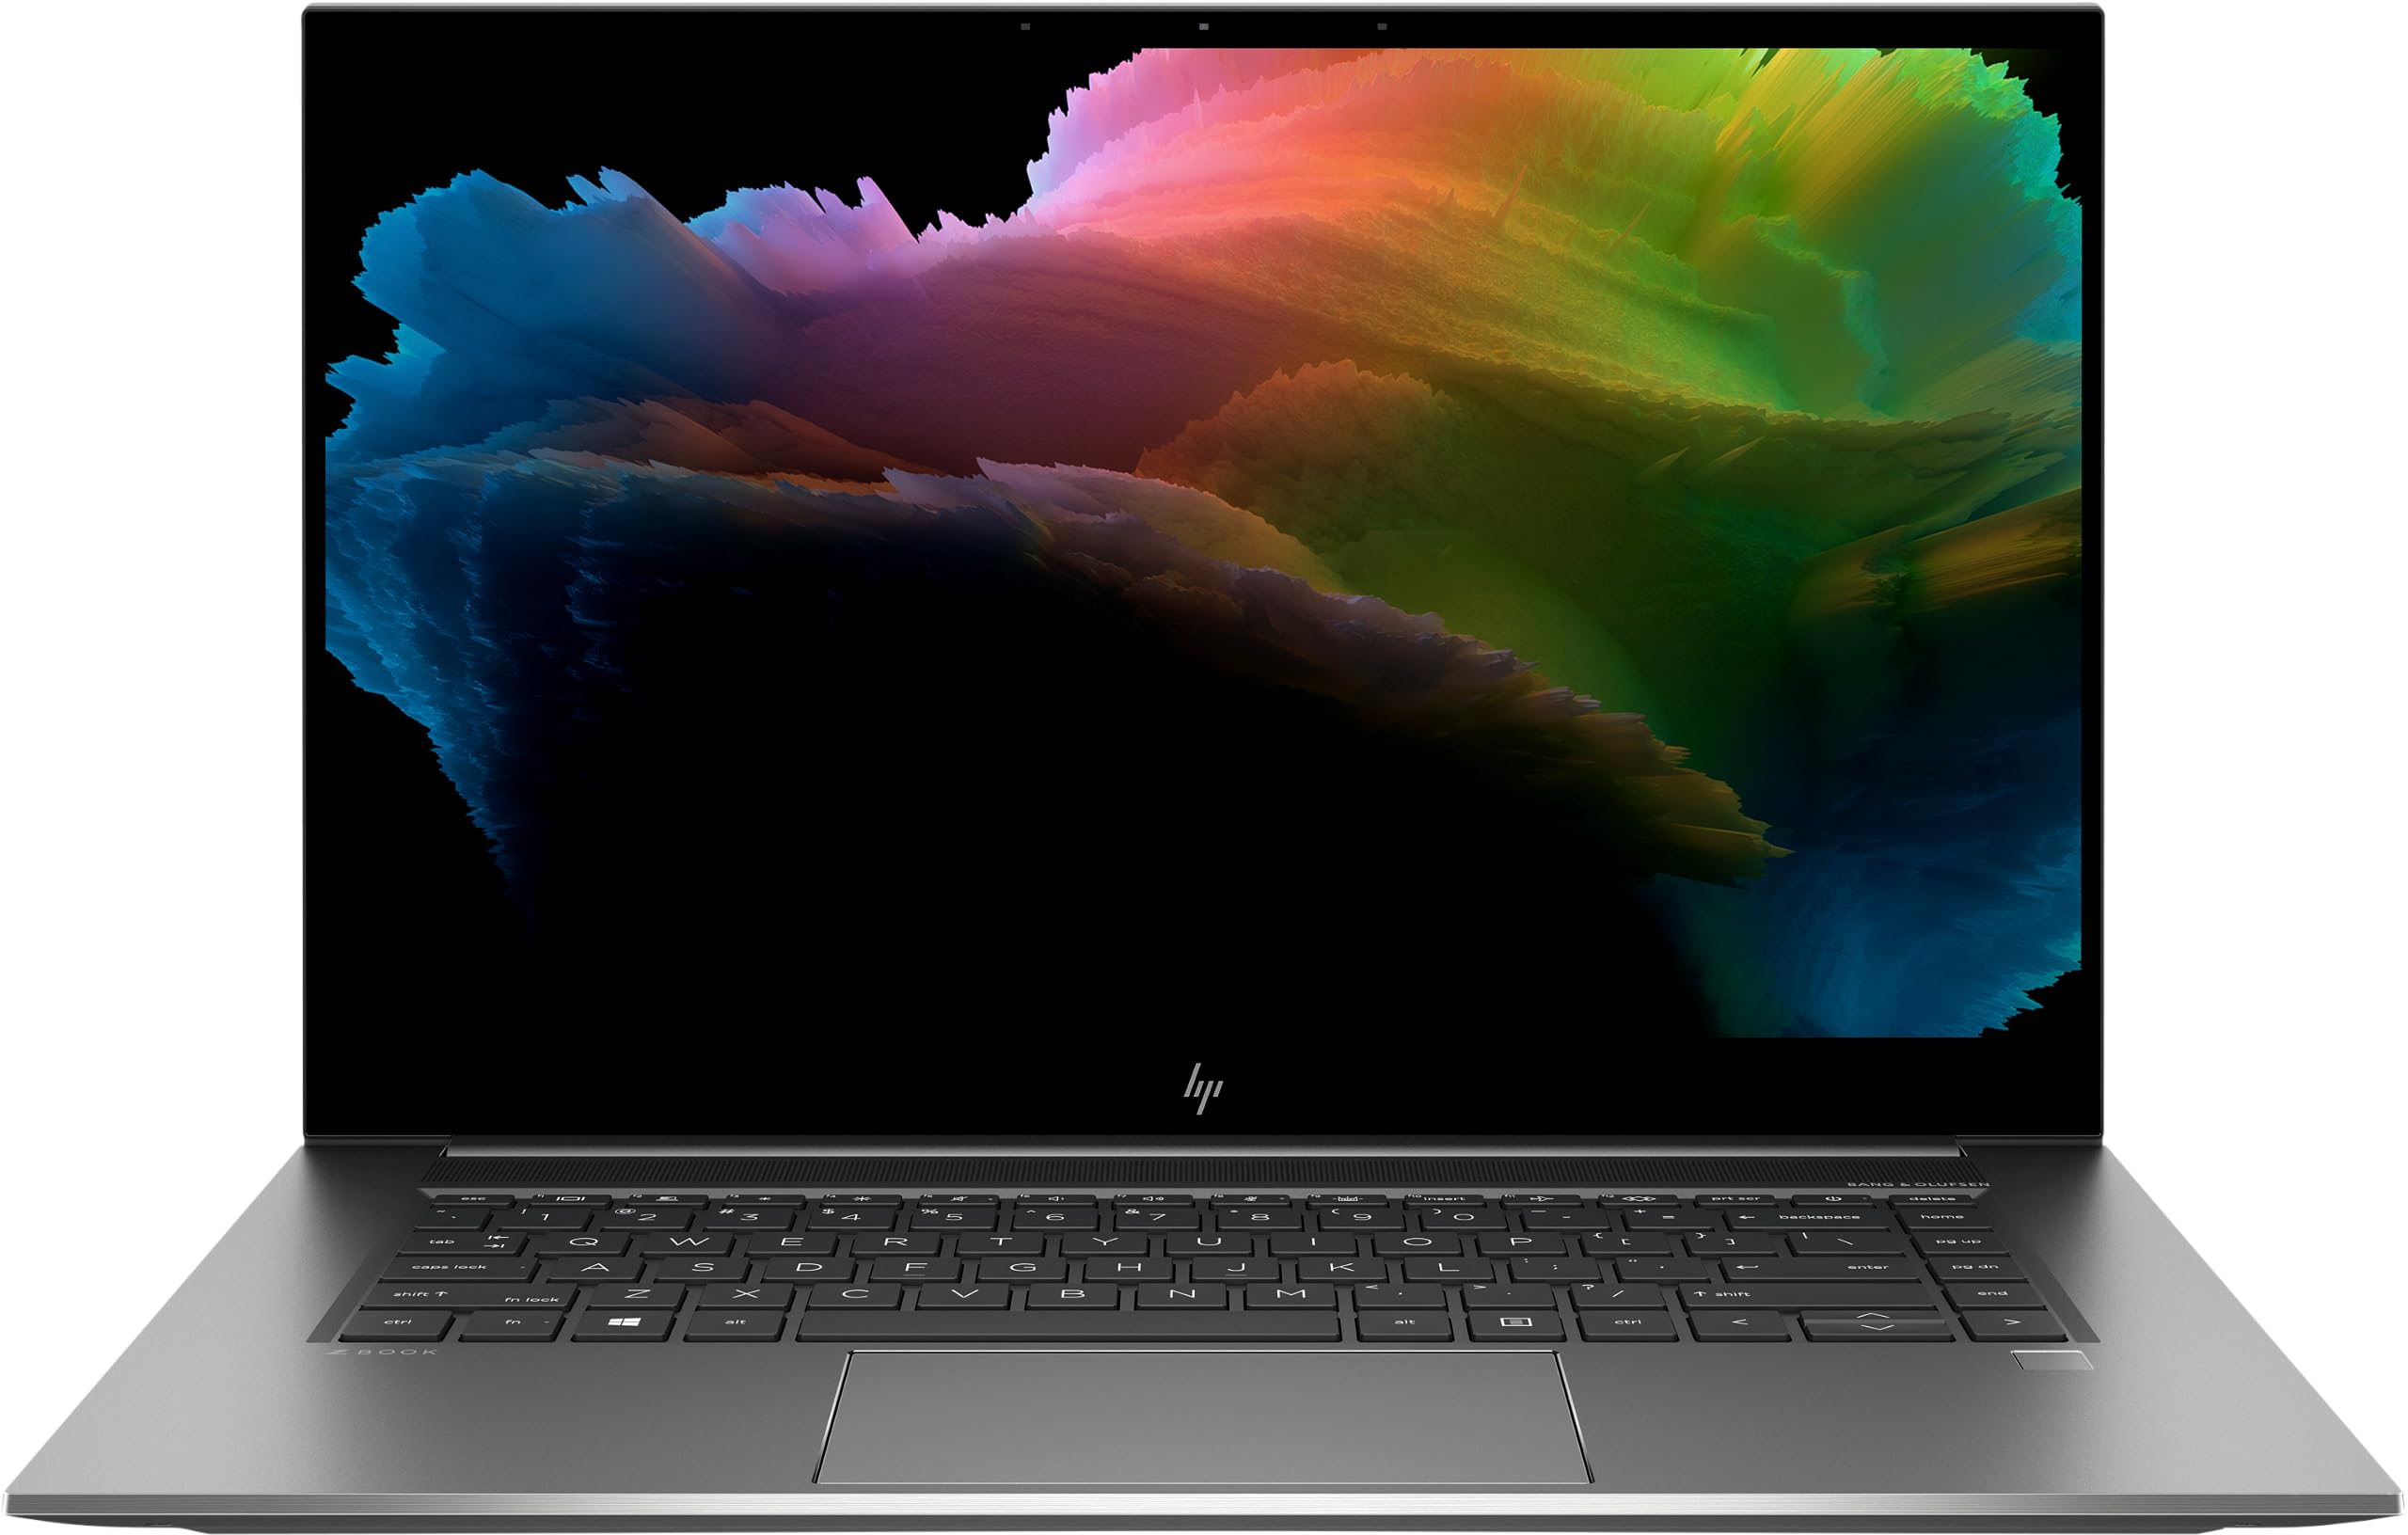 HP ZBook Create G7, Touchscreen 4K UHD, i7-10750H, Nvidia GeForce RTX 2070 MQ, 2TB PCIe Gen 4.0 x4 NVMe, 16GB DDR4, Fingerprint & SD Card Reader, WIFI 6 & BT 5, Backlit Keys, Windows 11 Pro (Renewed)